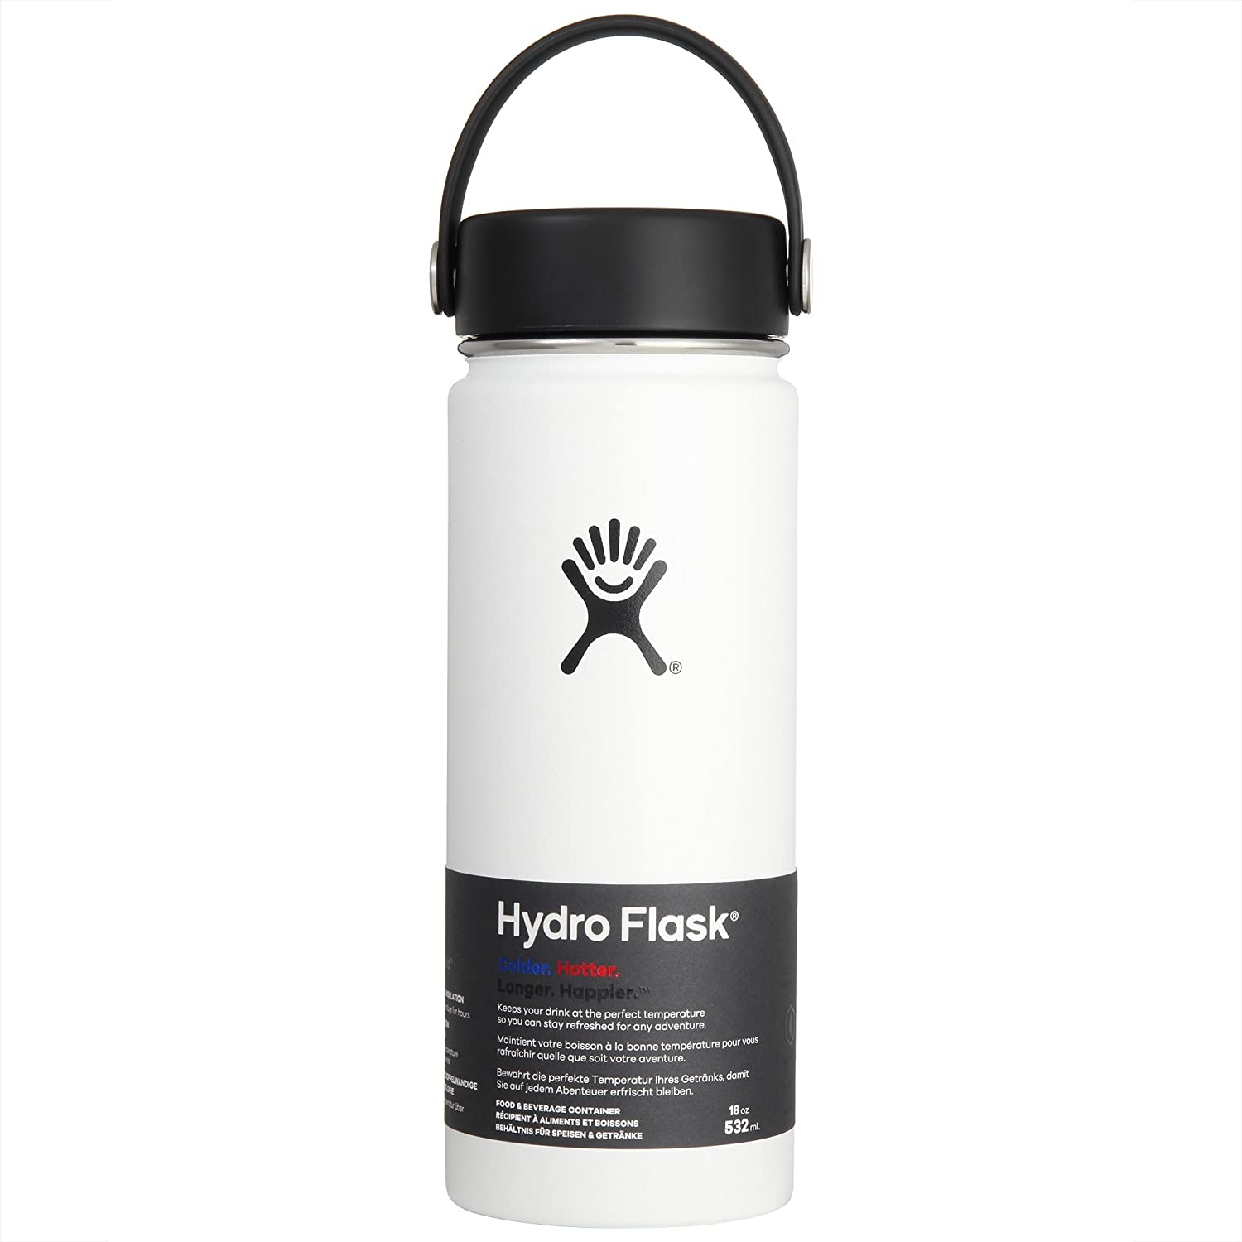 Hydro Flask(ハイドロフラスク) 18 oz Wide Mouth Whiteの商品画像3 